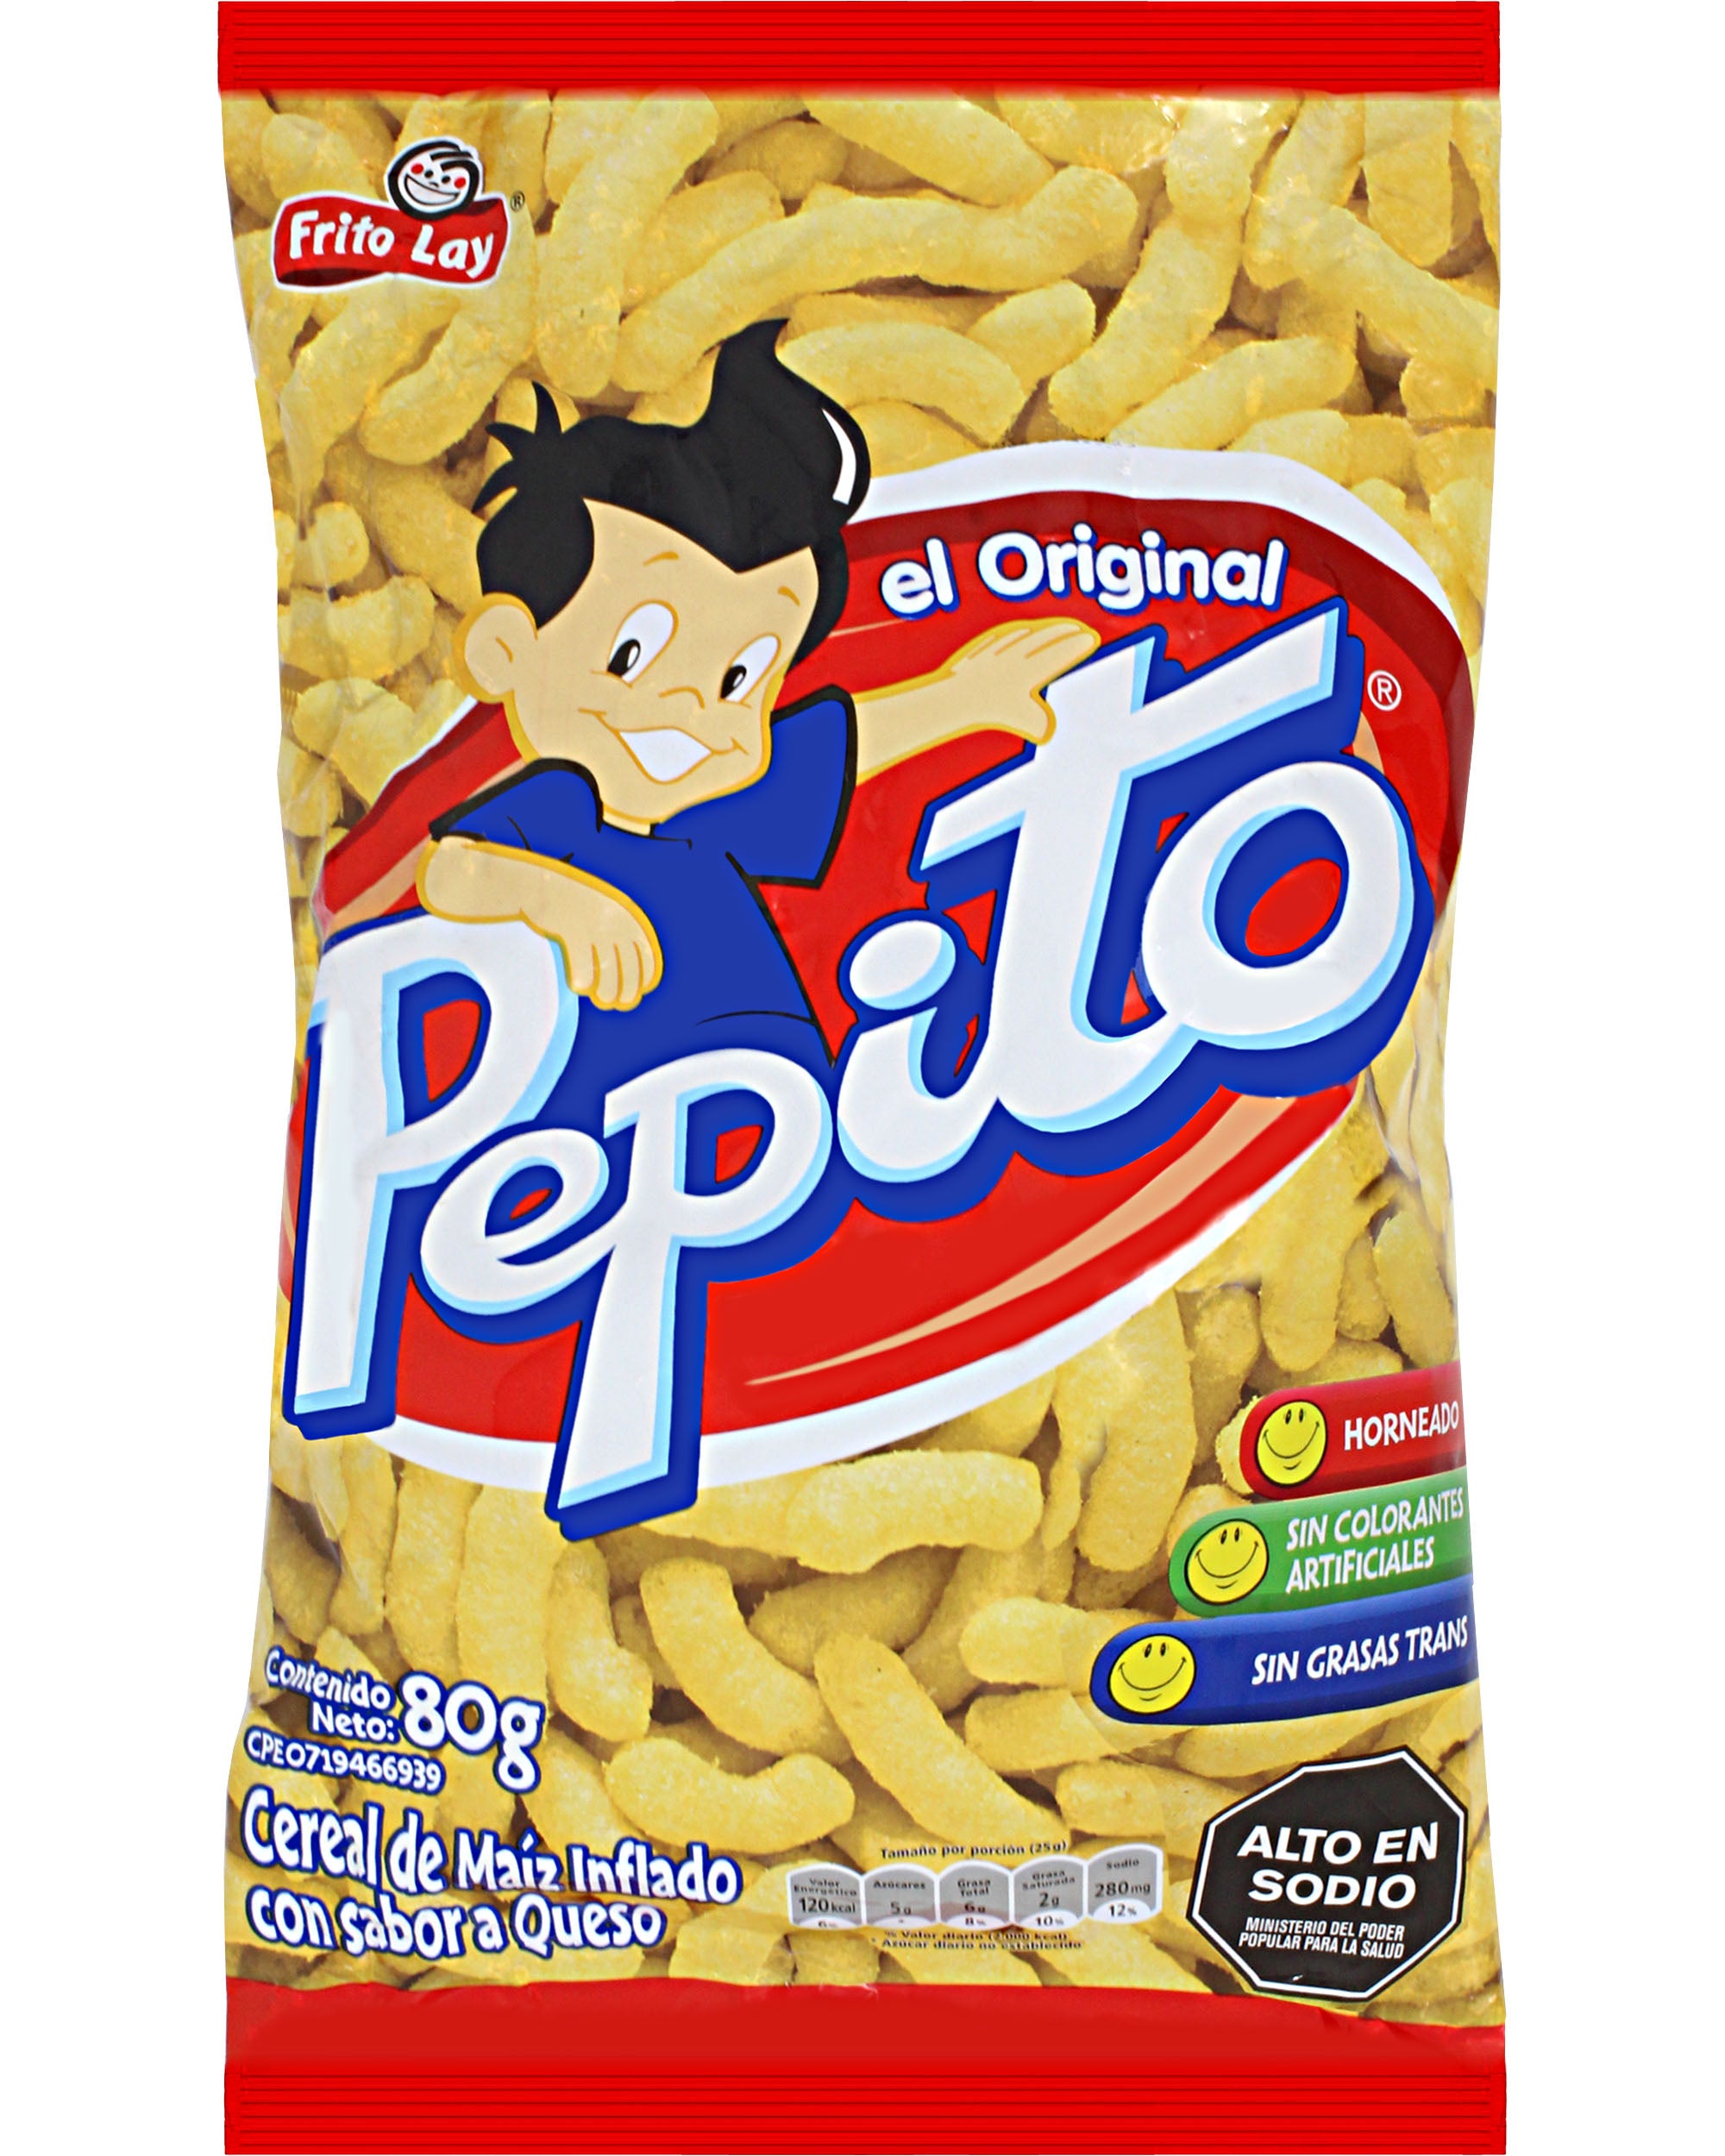 Frito Lay Pepito (Cheese-Flavored Corn Puffs) (Large Bag) - 2.8 oz / 80 g